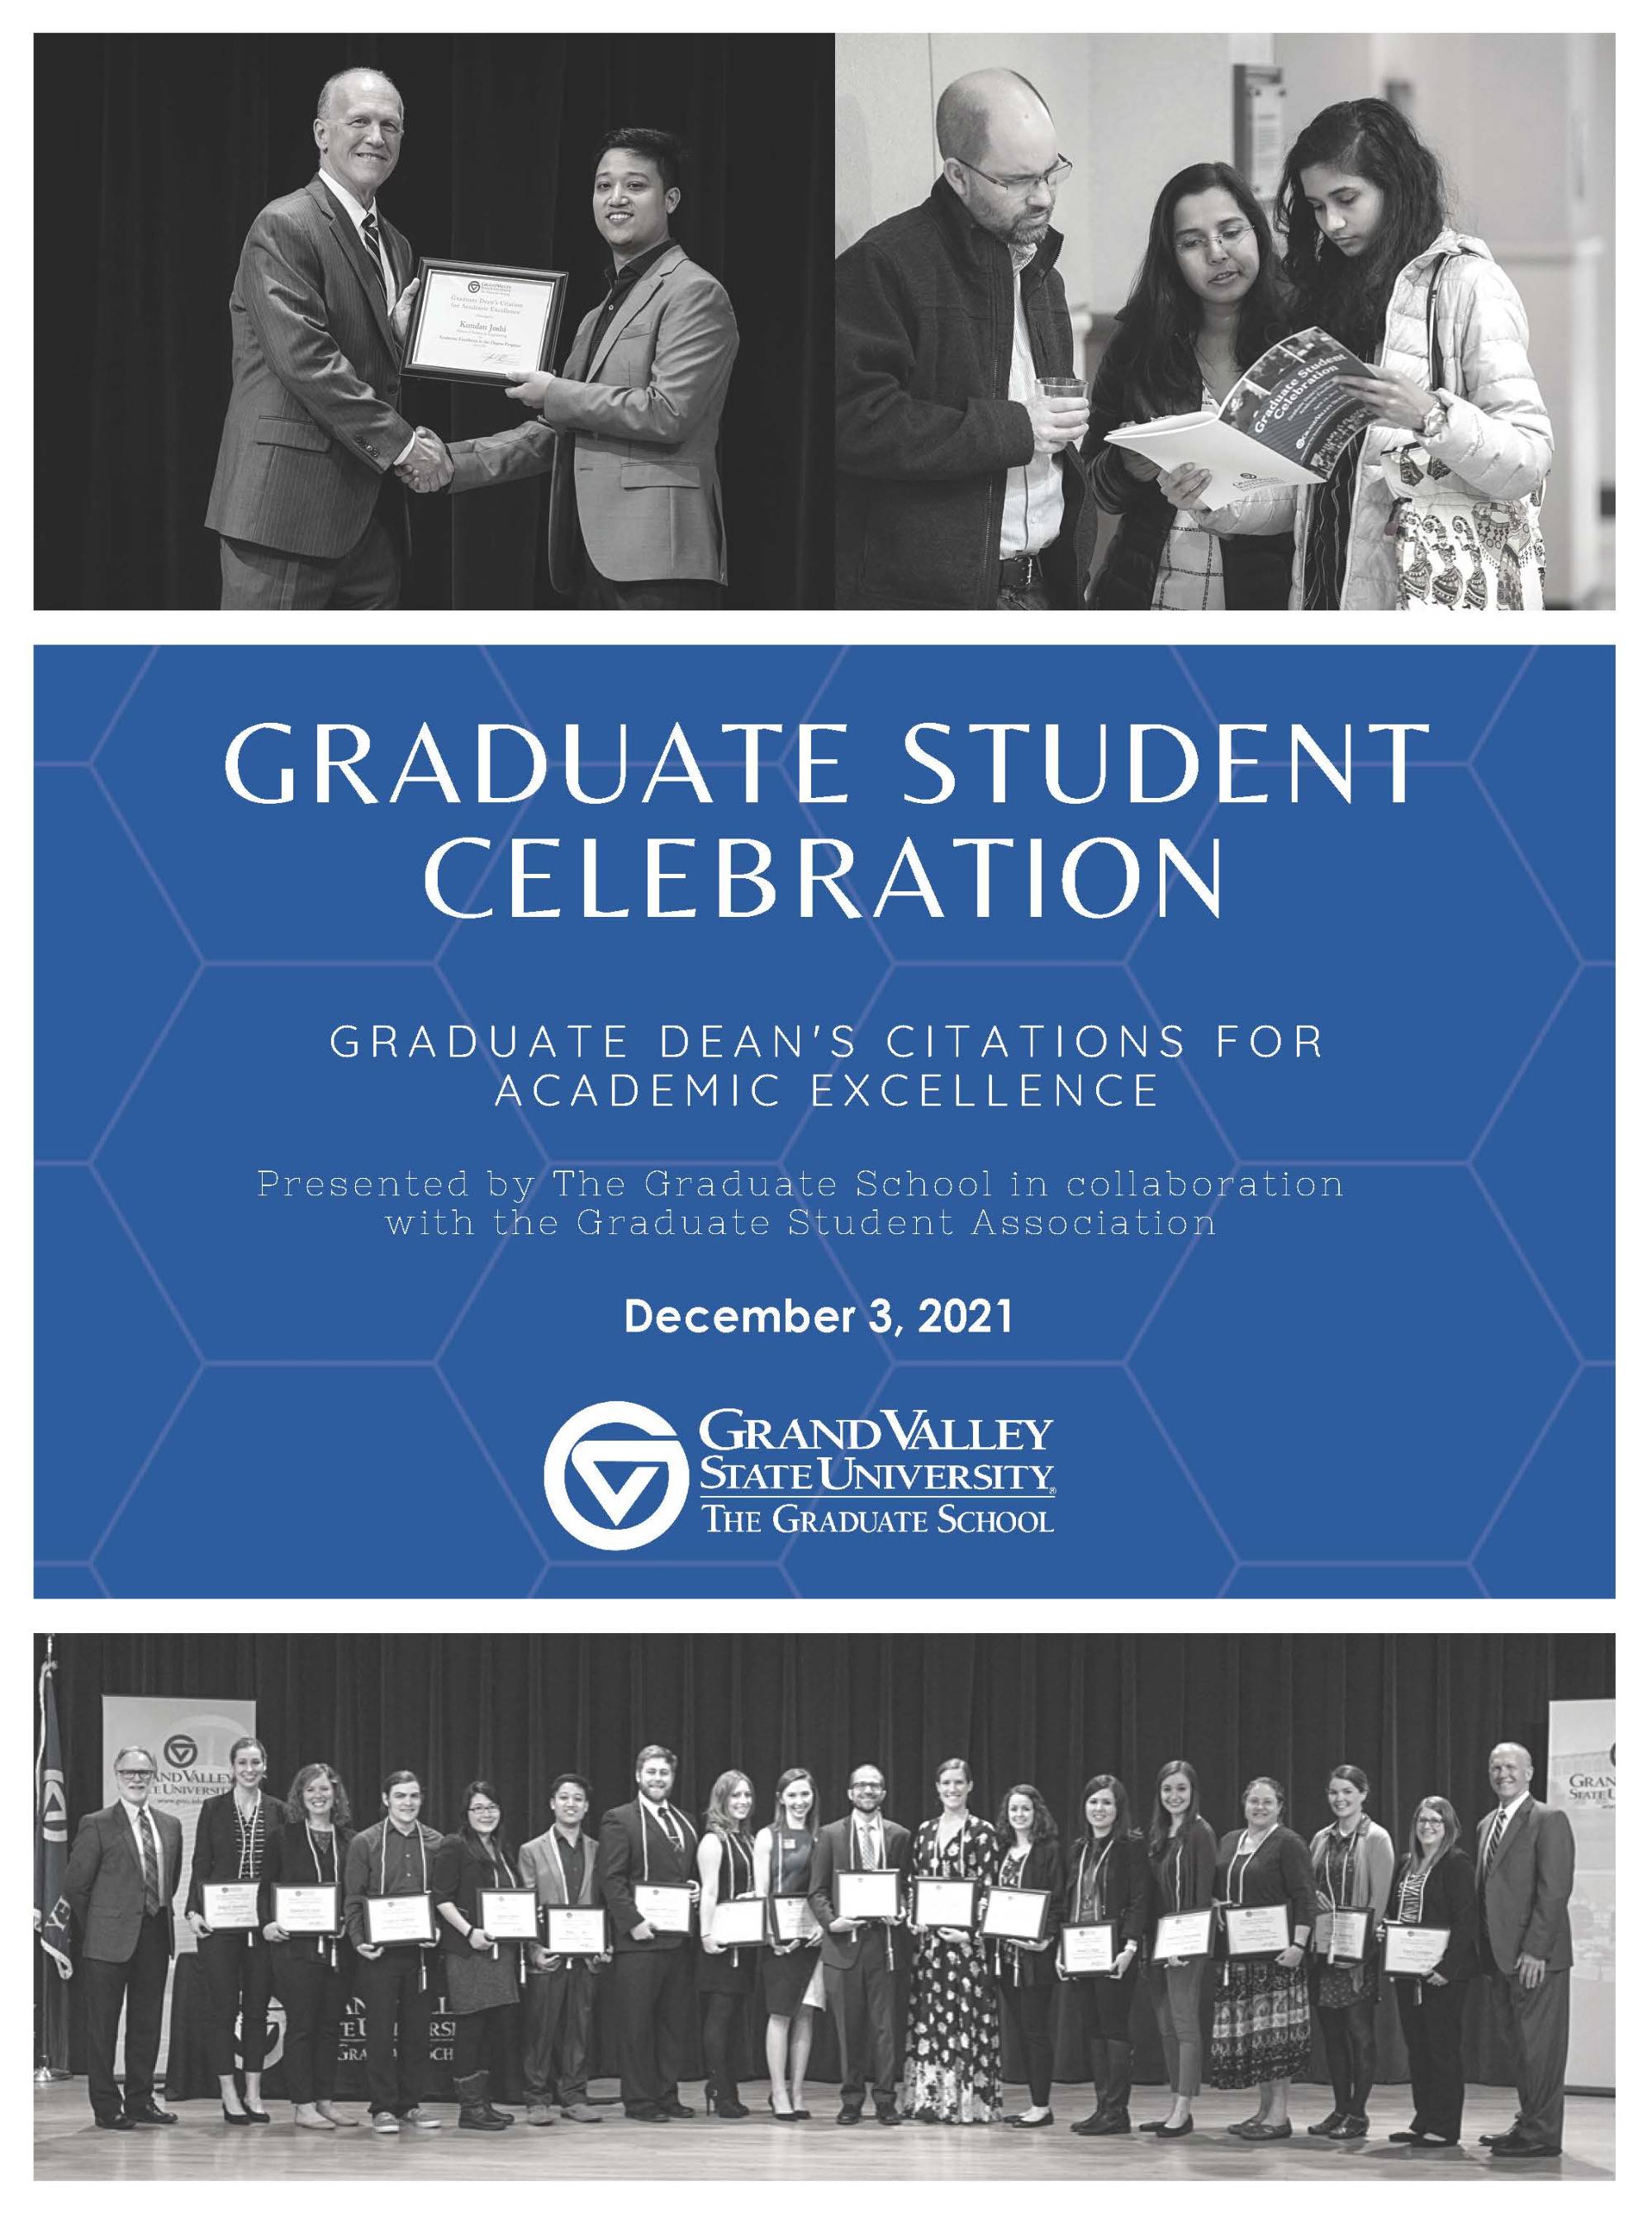 The Graduate School Citation Awards